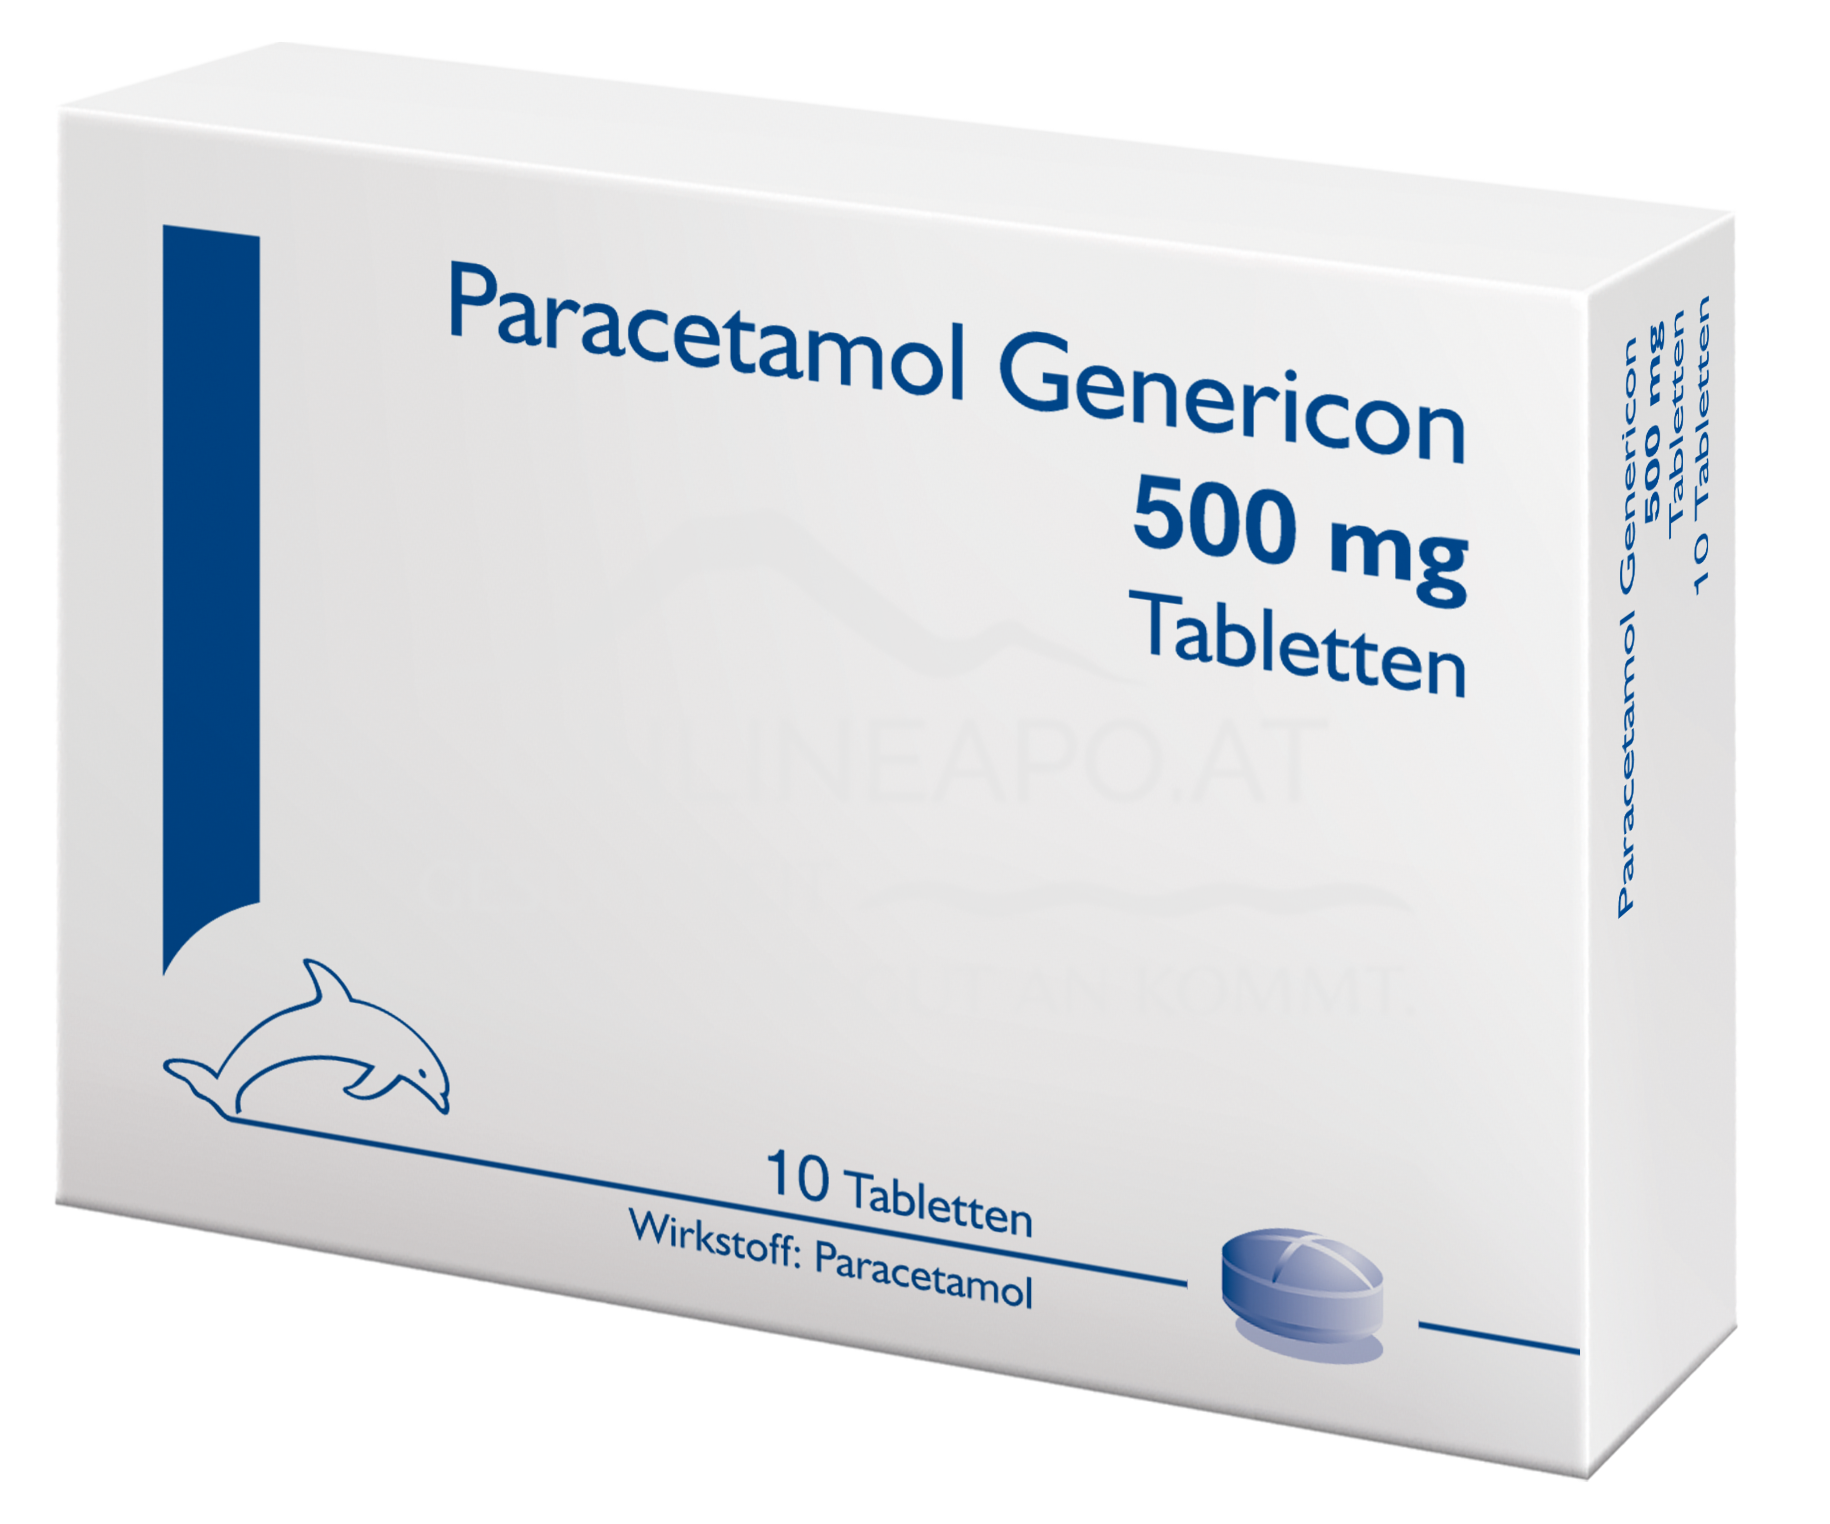 Paracetamol Genericon 500 mg Tabletten